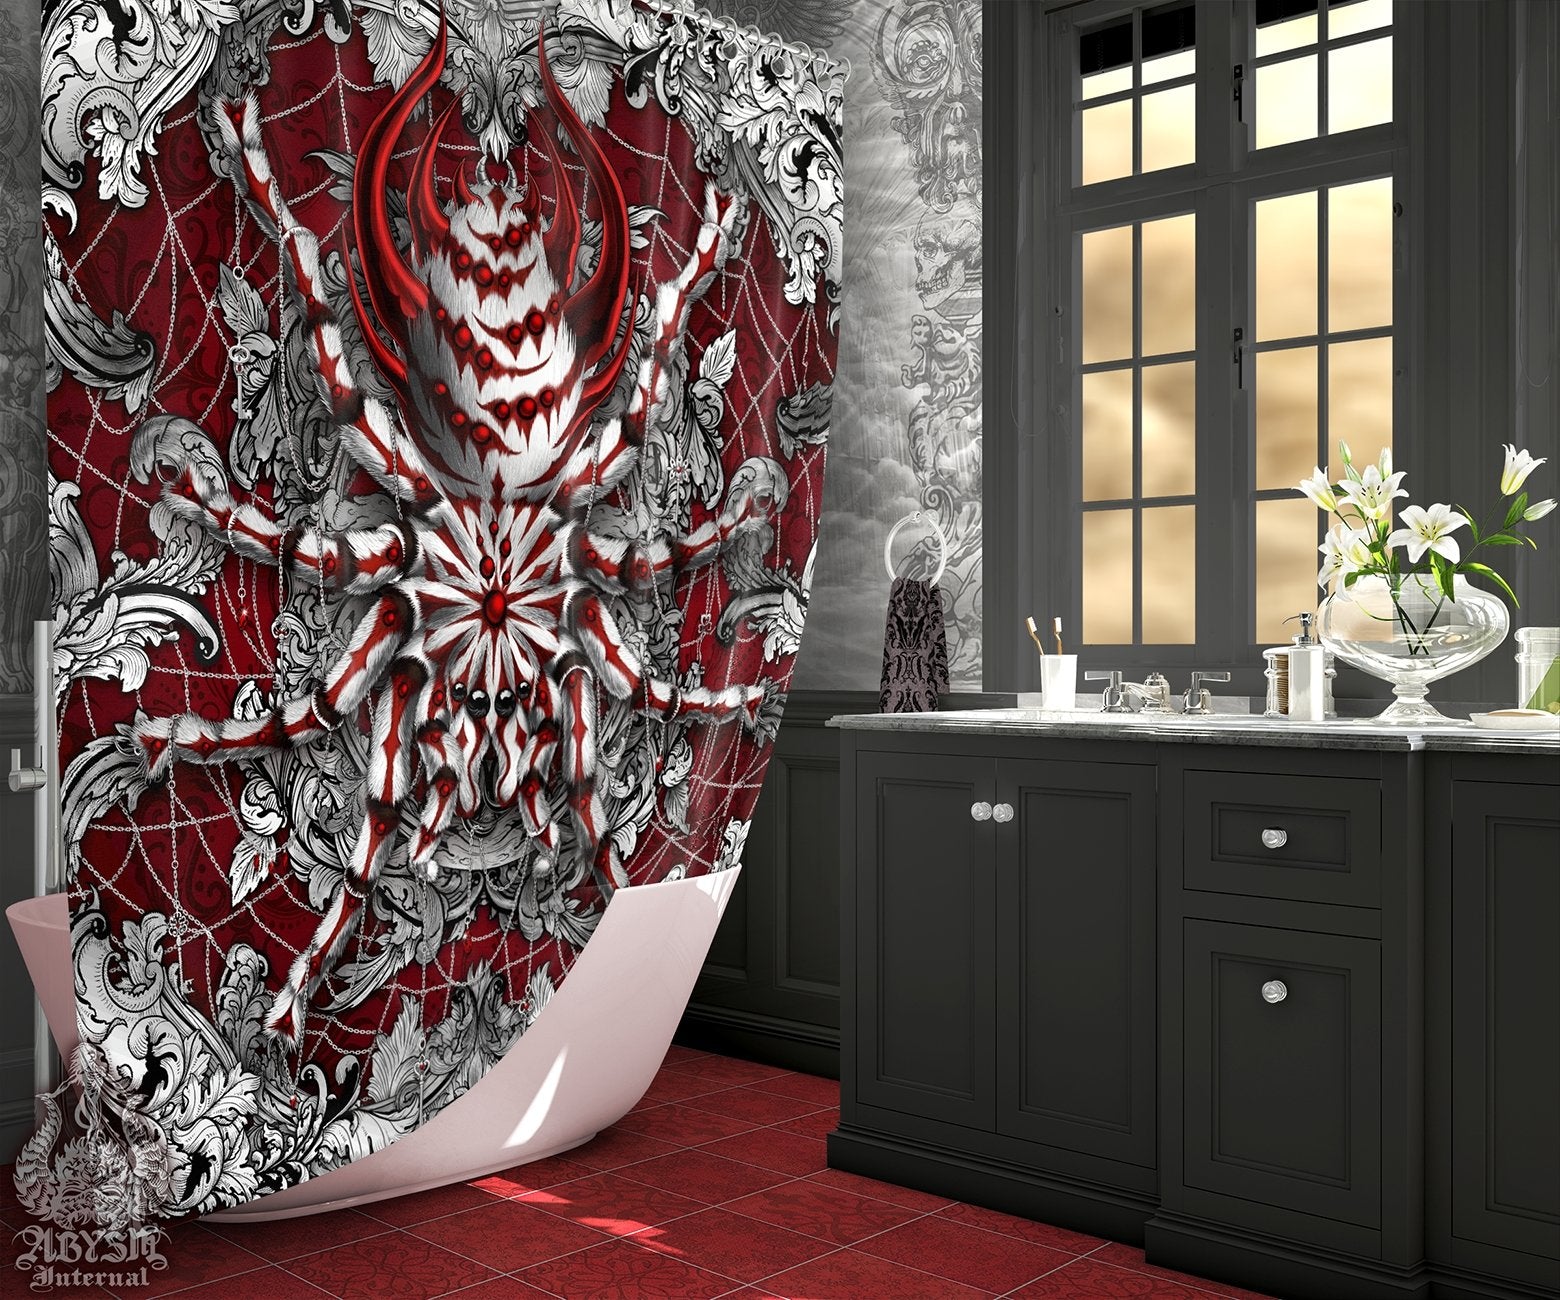 Silver Spider Shower Curtain, Alternative Bathroom Decor, Indie Home - Baroque Red, Tarantula Art - Abysm Internal